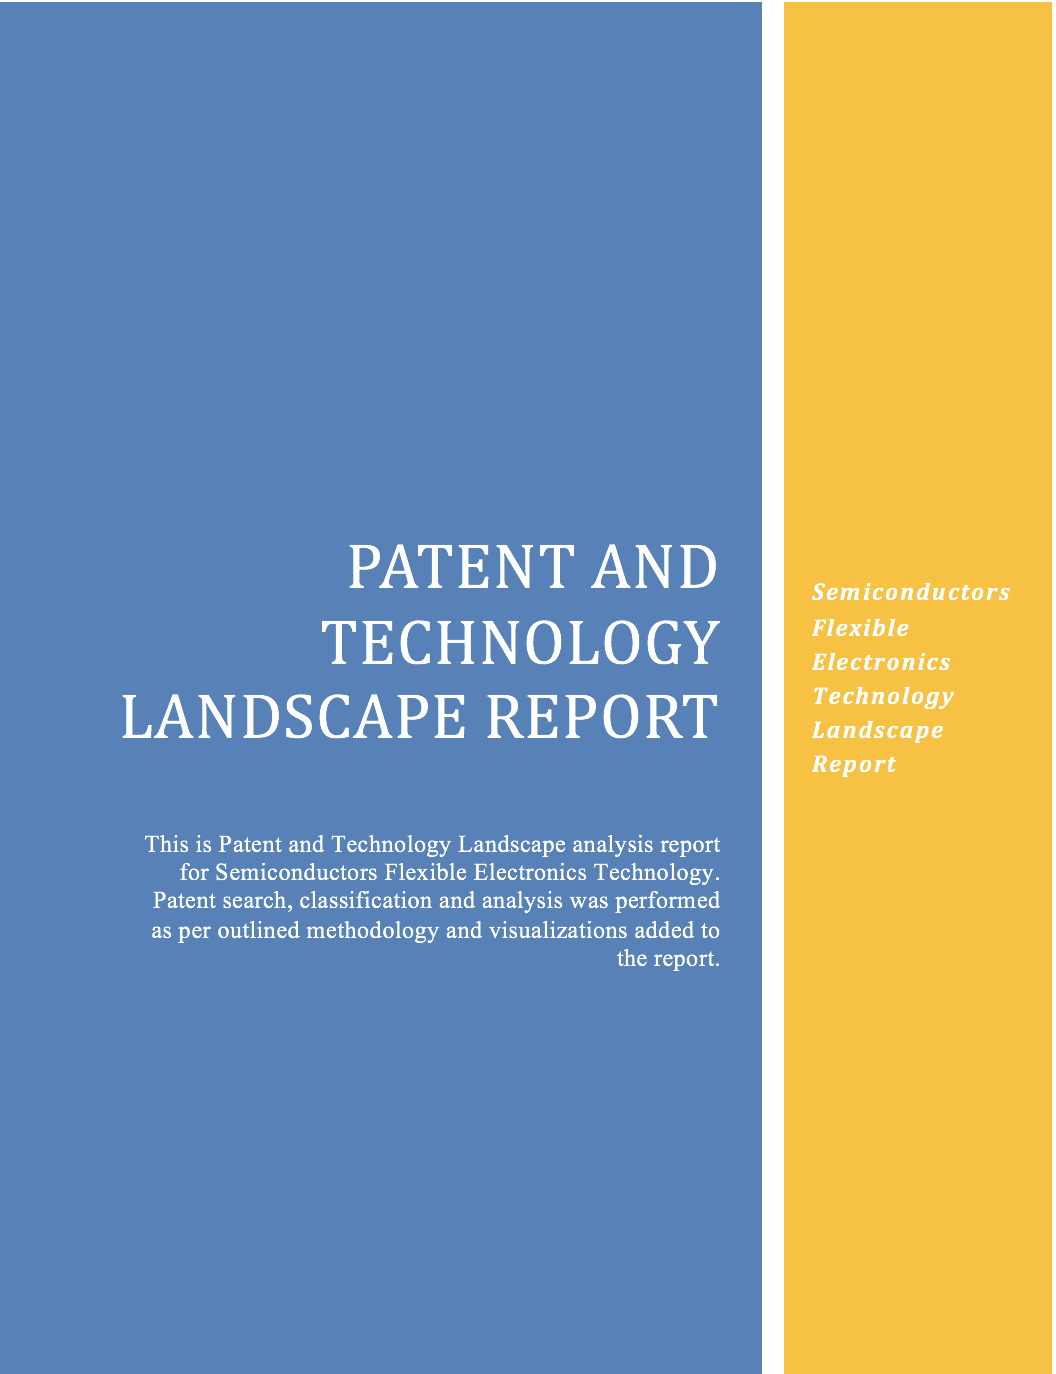 Semiconductors Flexible Electronics Technology Landscape Report